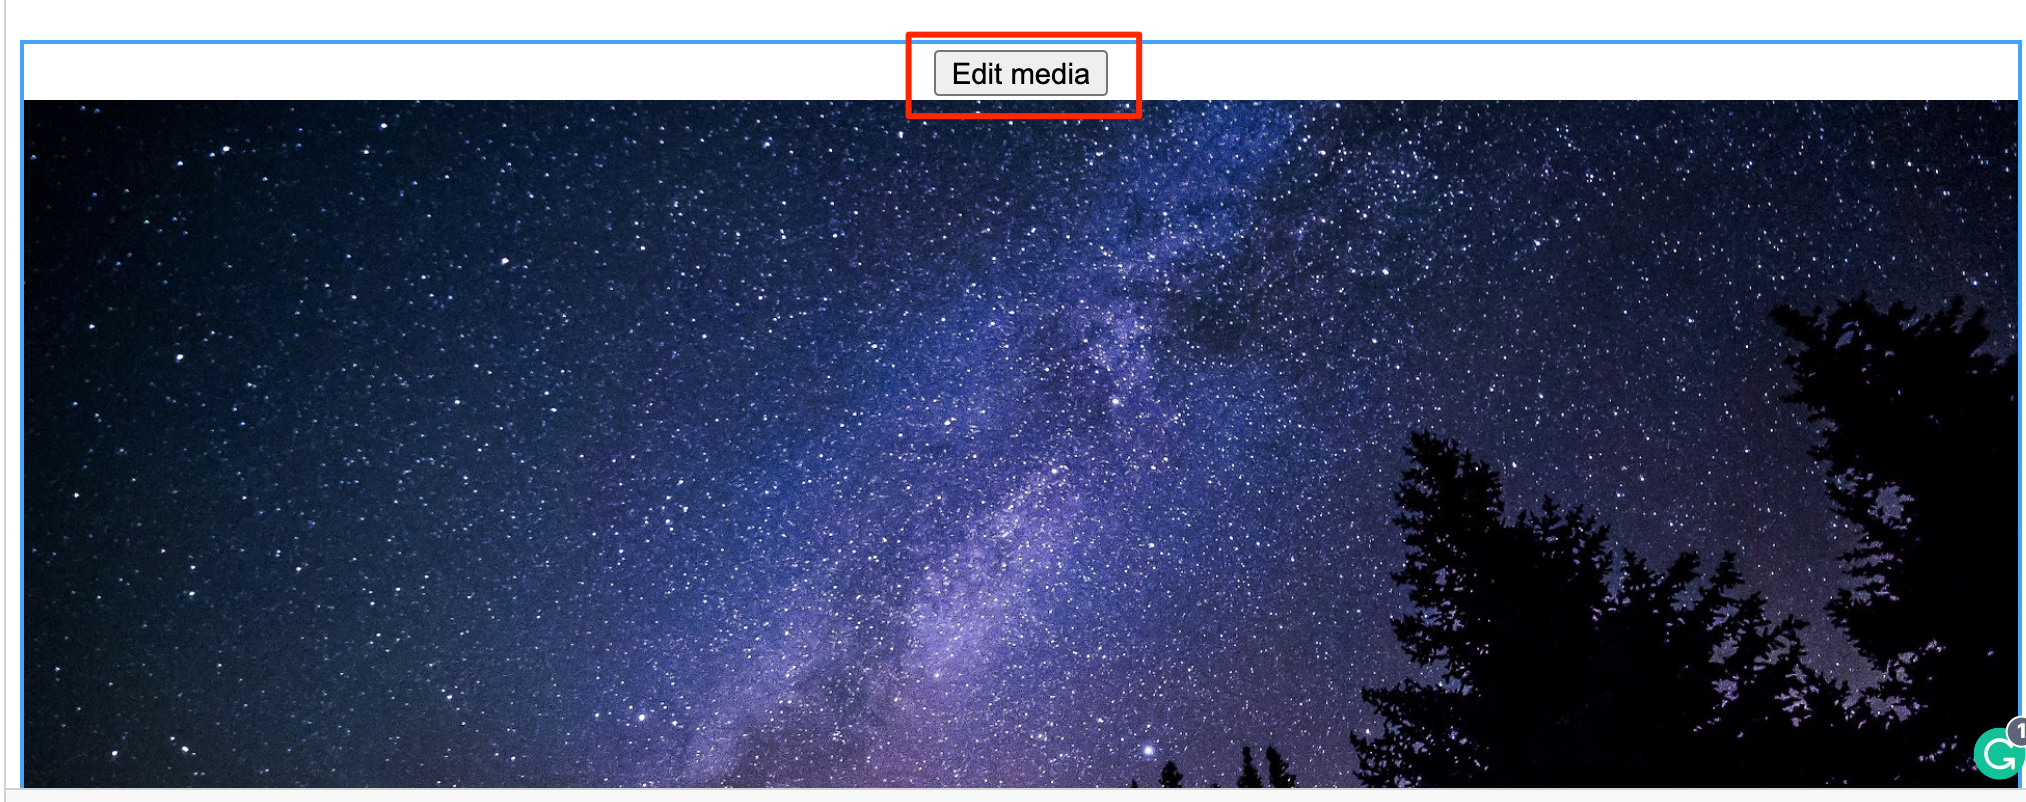 Screenshot showing an image's Edit media button.